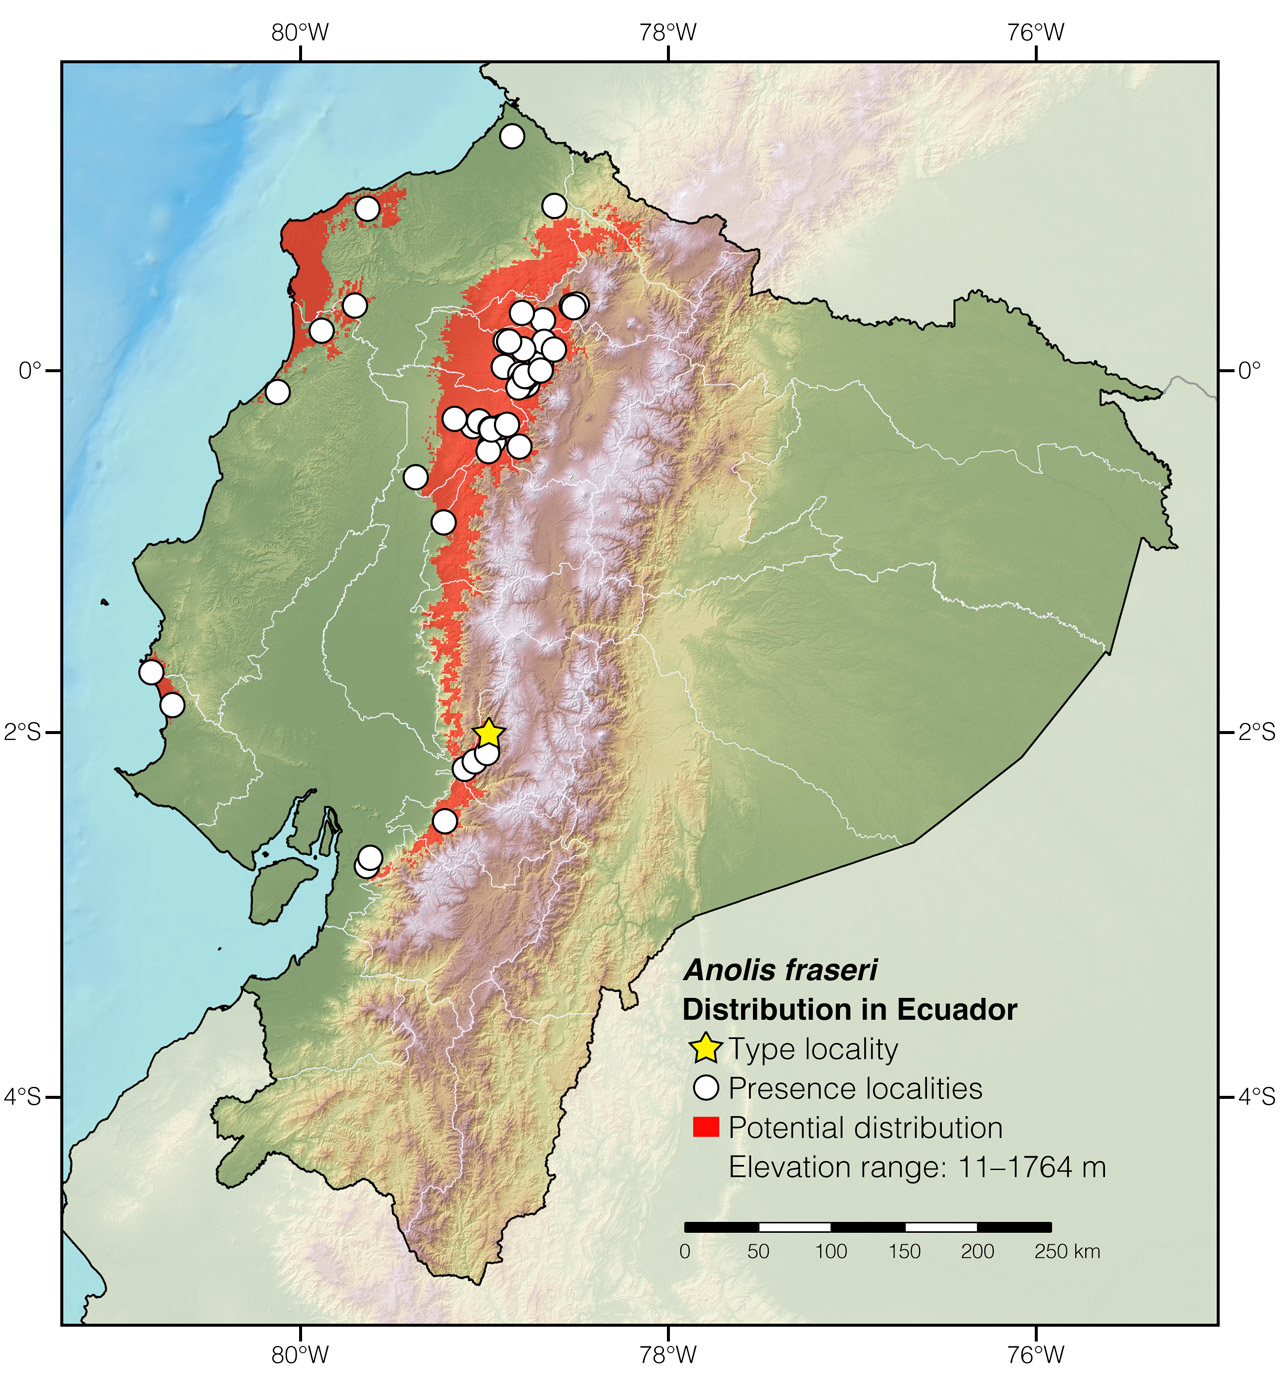 Distribution of Anolis fraseri in Ecuador